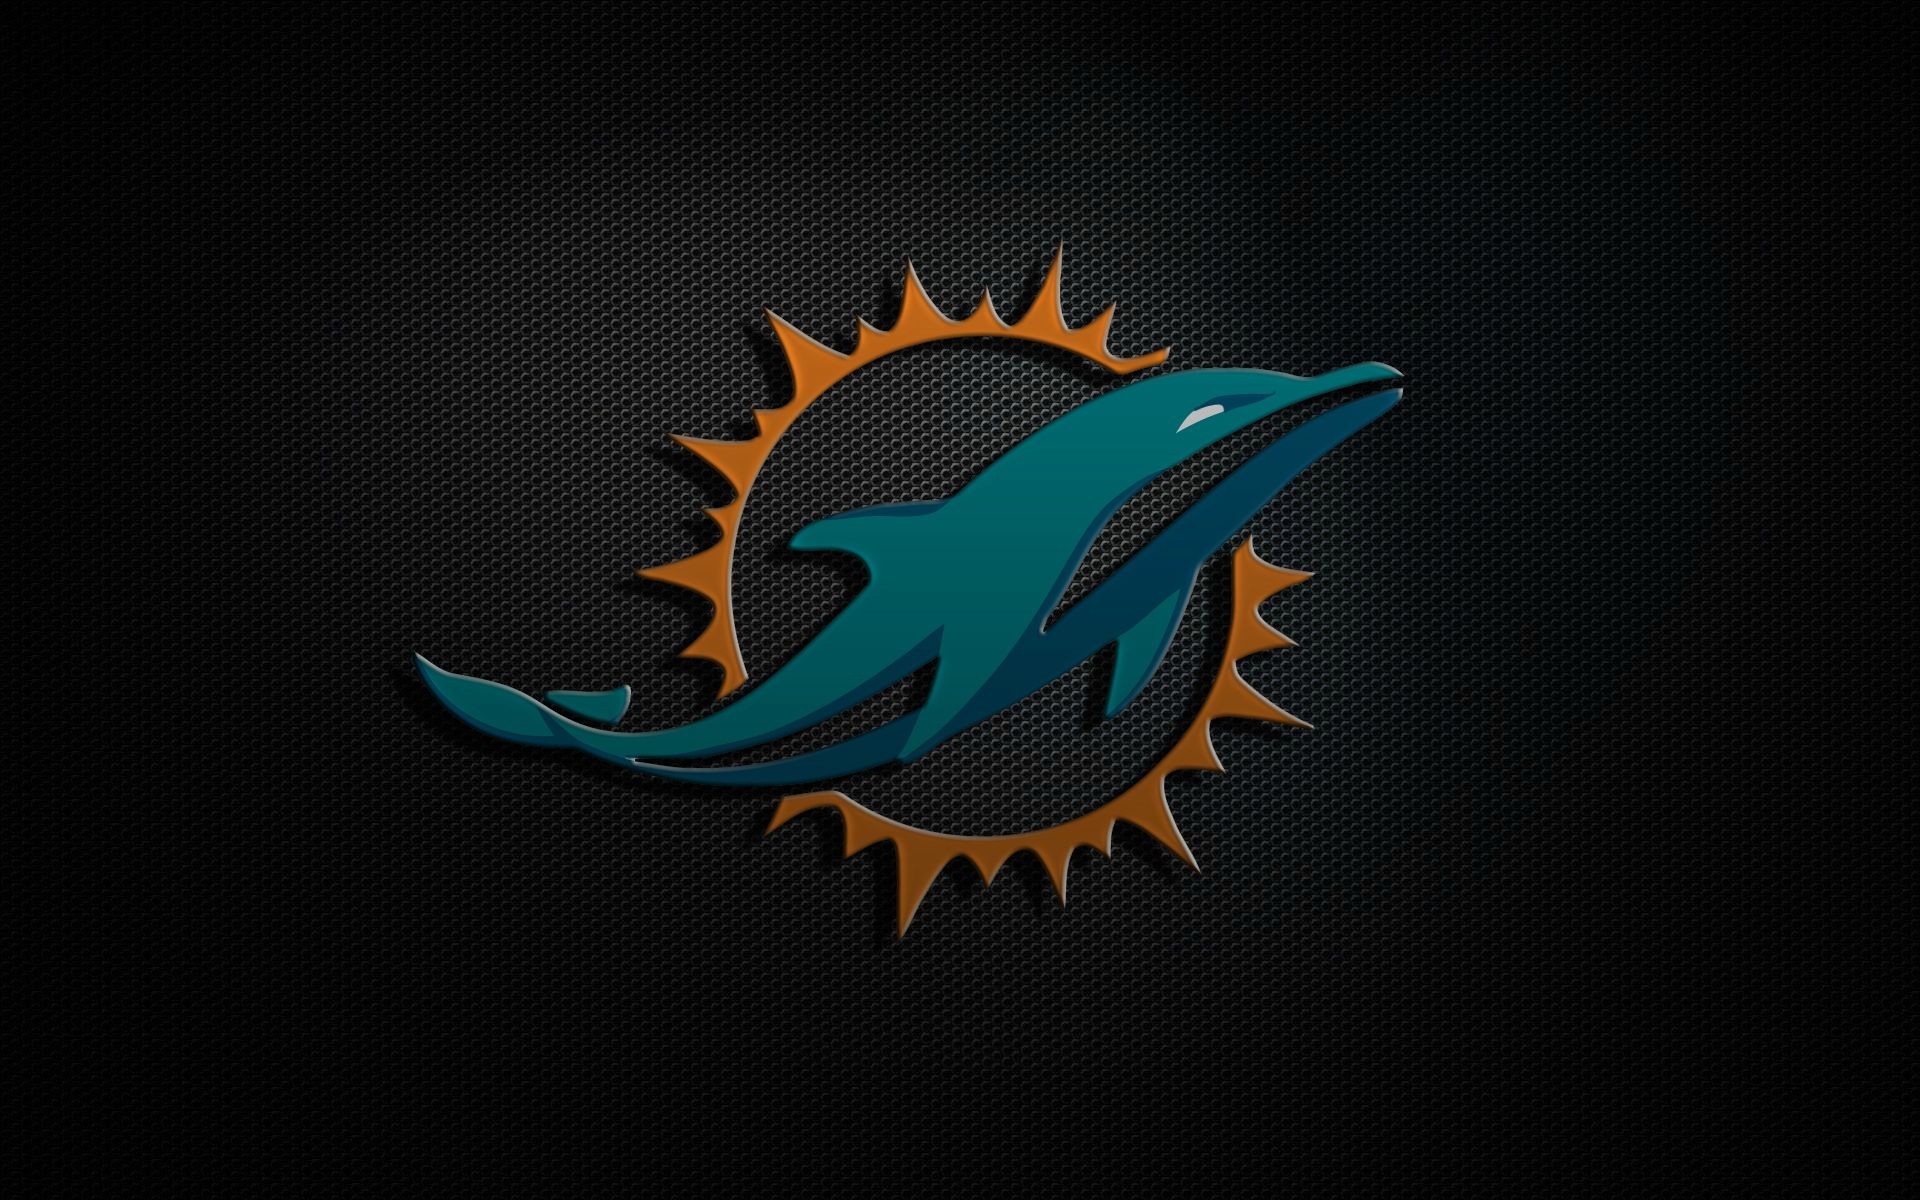 Miami Dolphins Wallpaper Screensavers Image